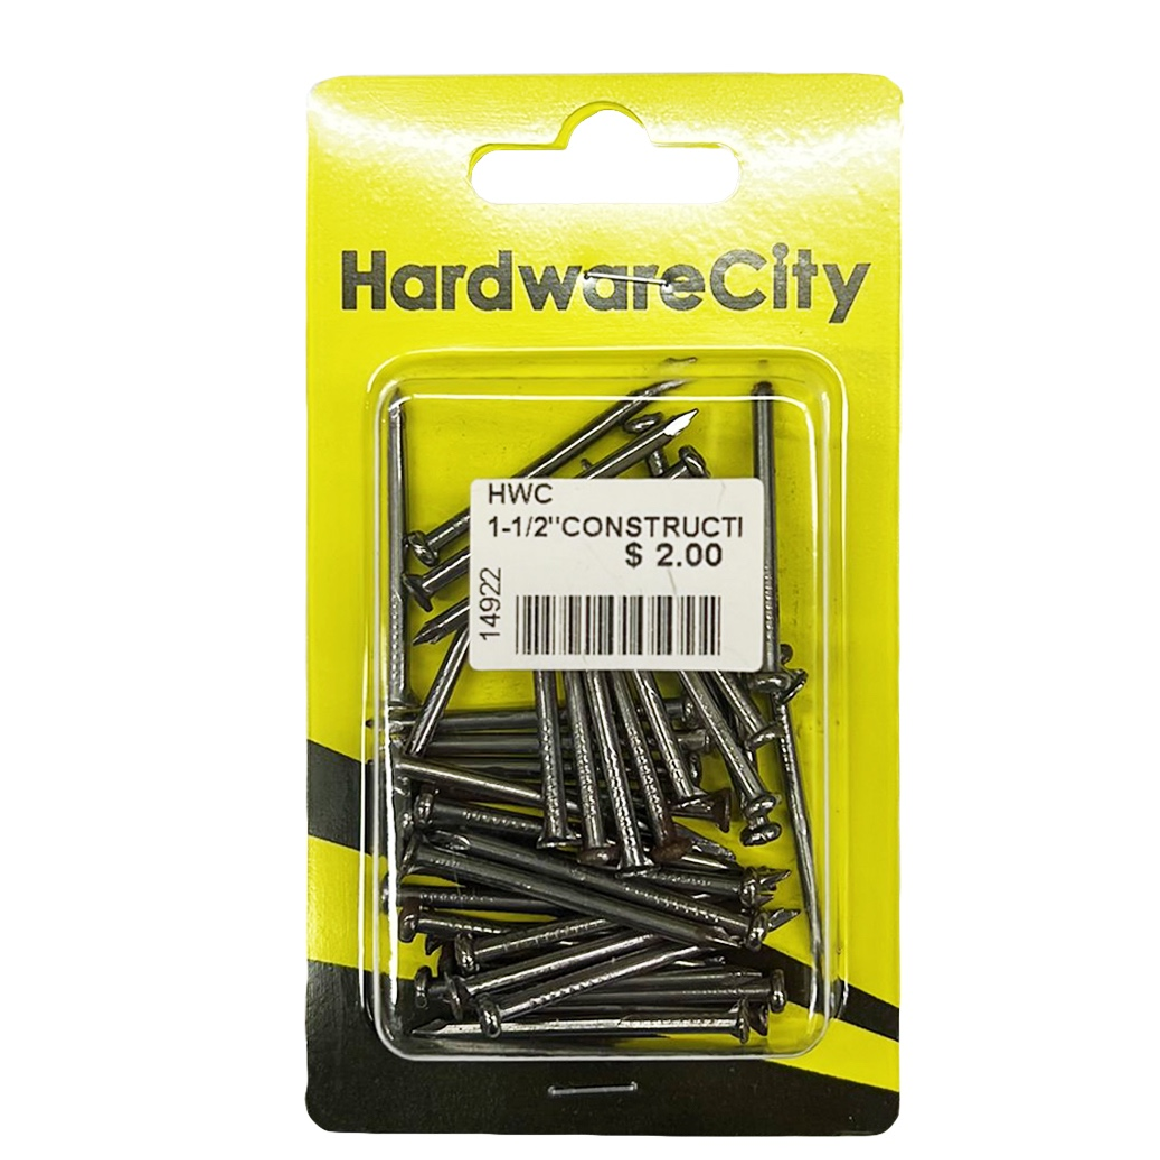 HardwareCity 1-1/2" Construction Wood Nails DIY PACK